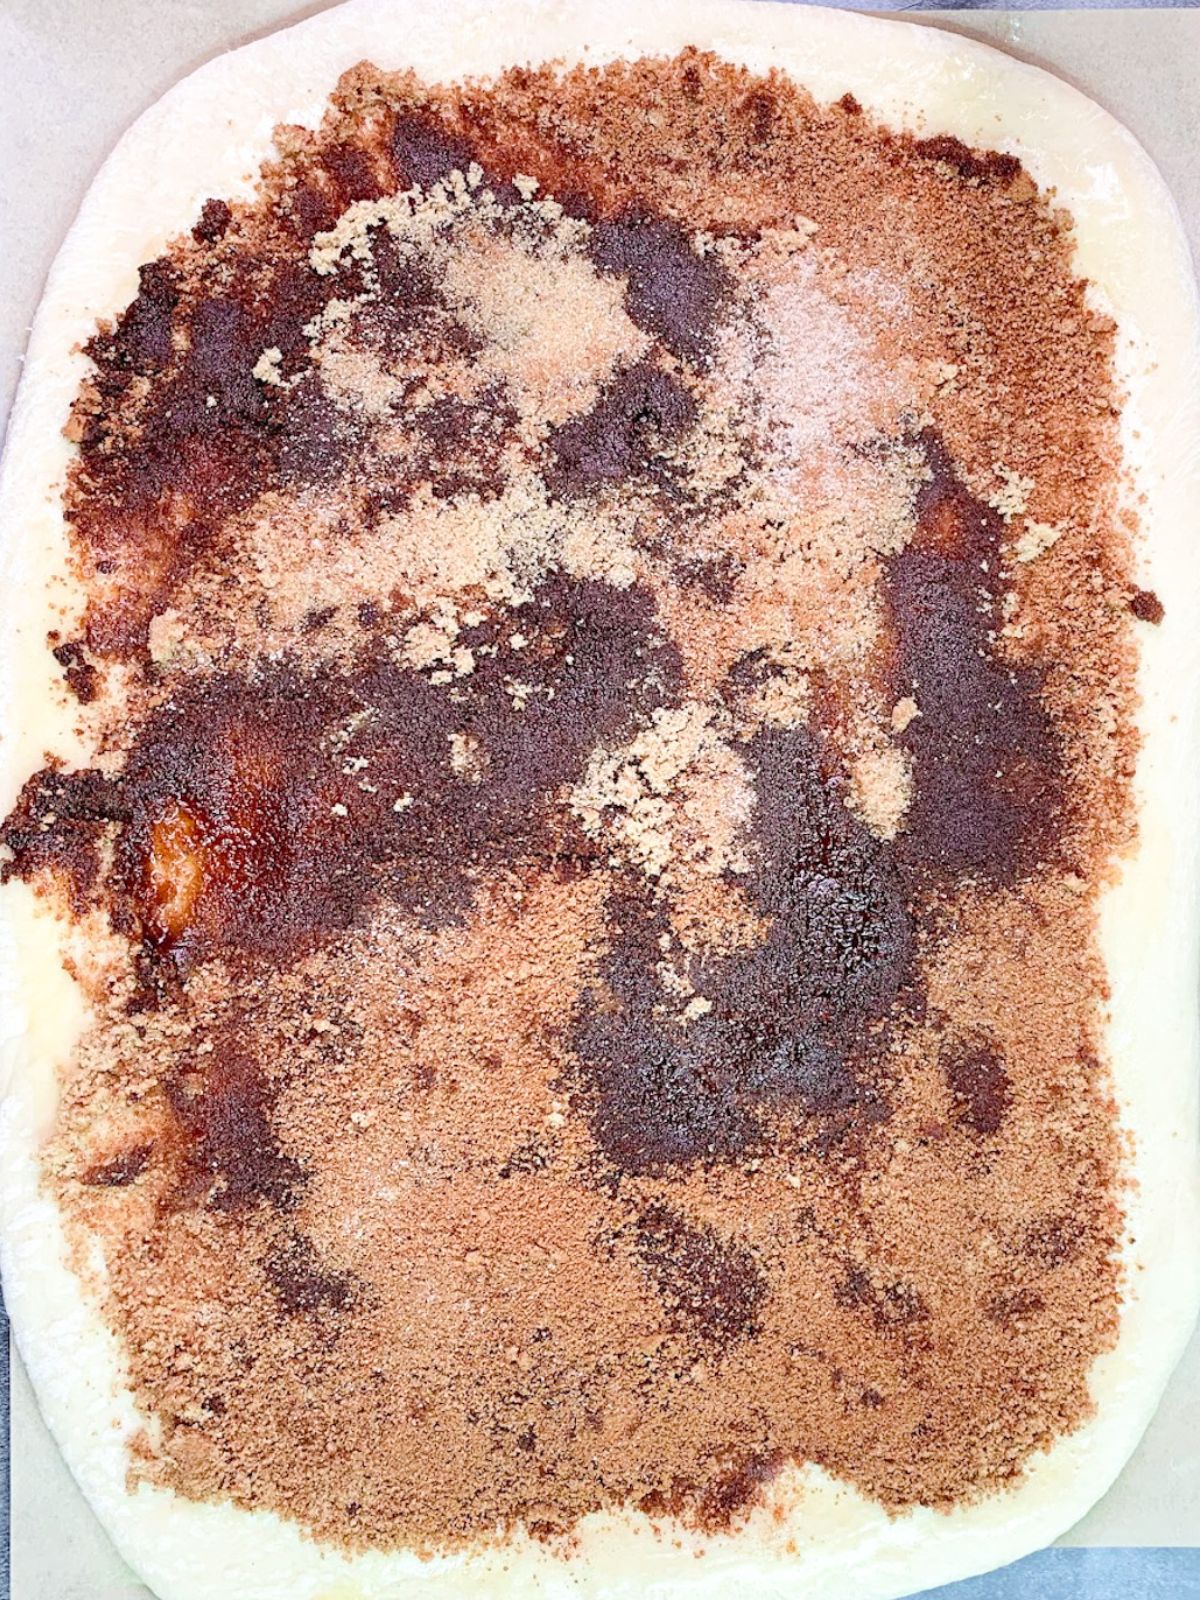 spread cinnamon and sugar mixture evenly over bread machine dough.